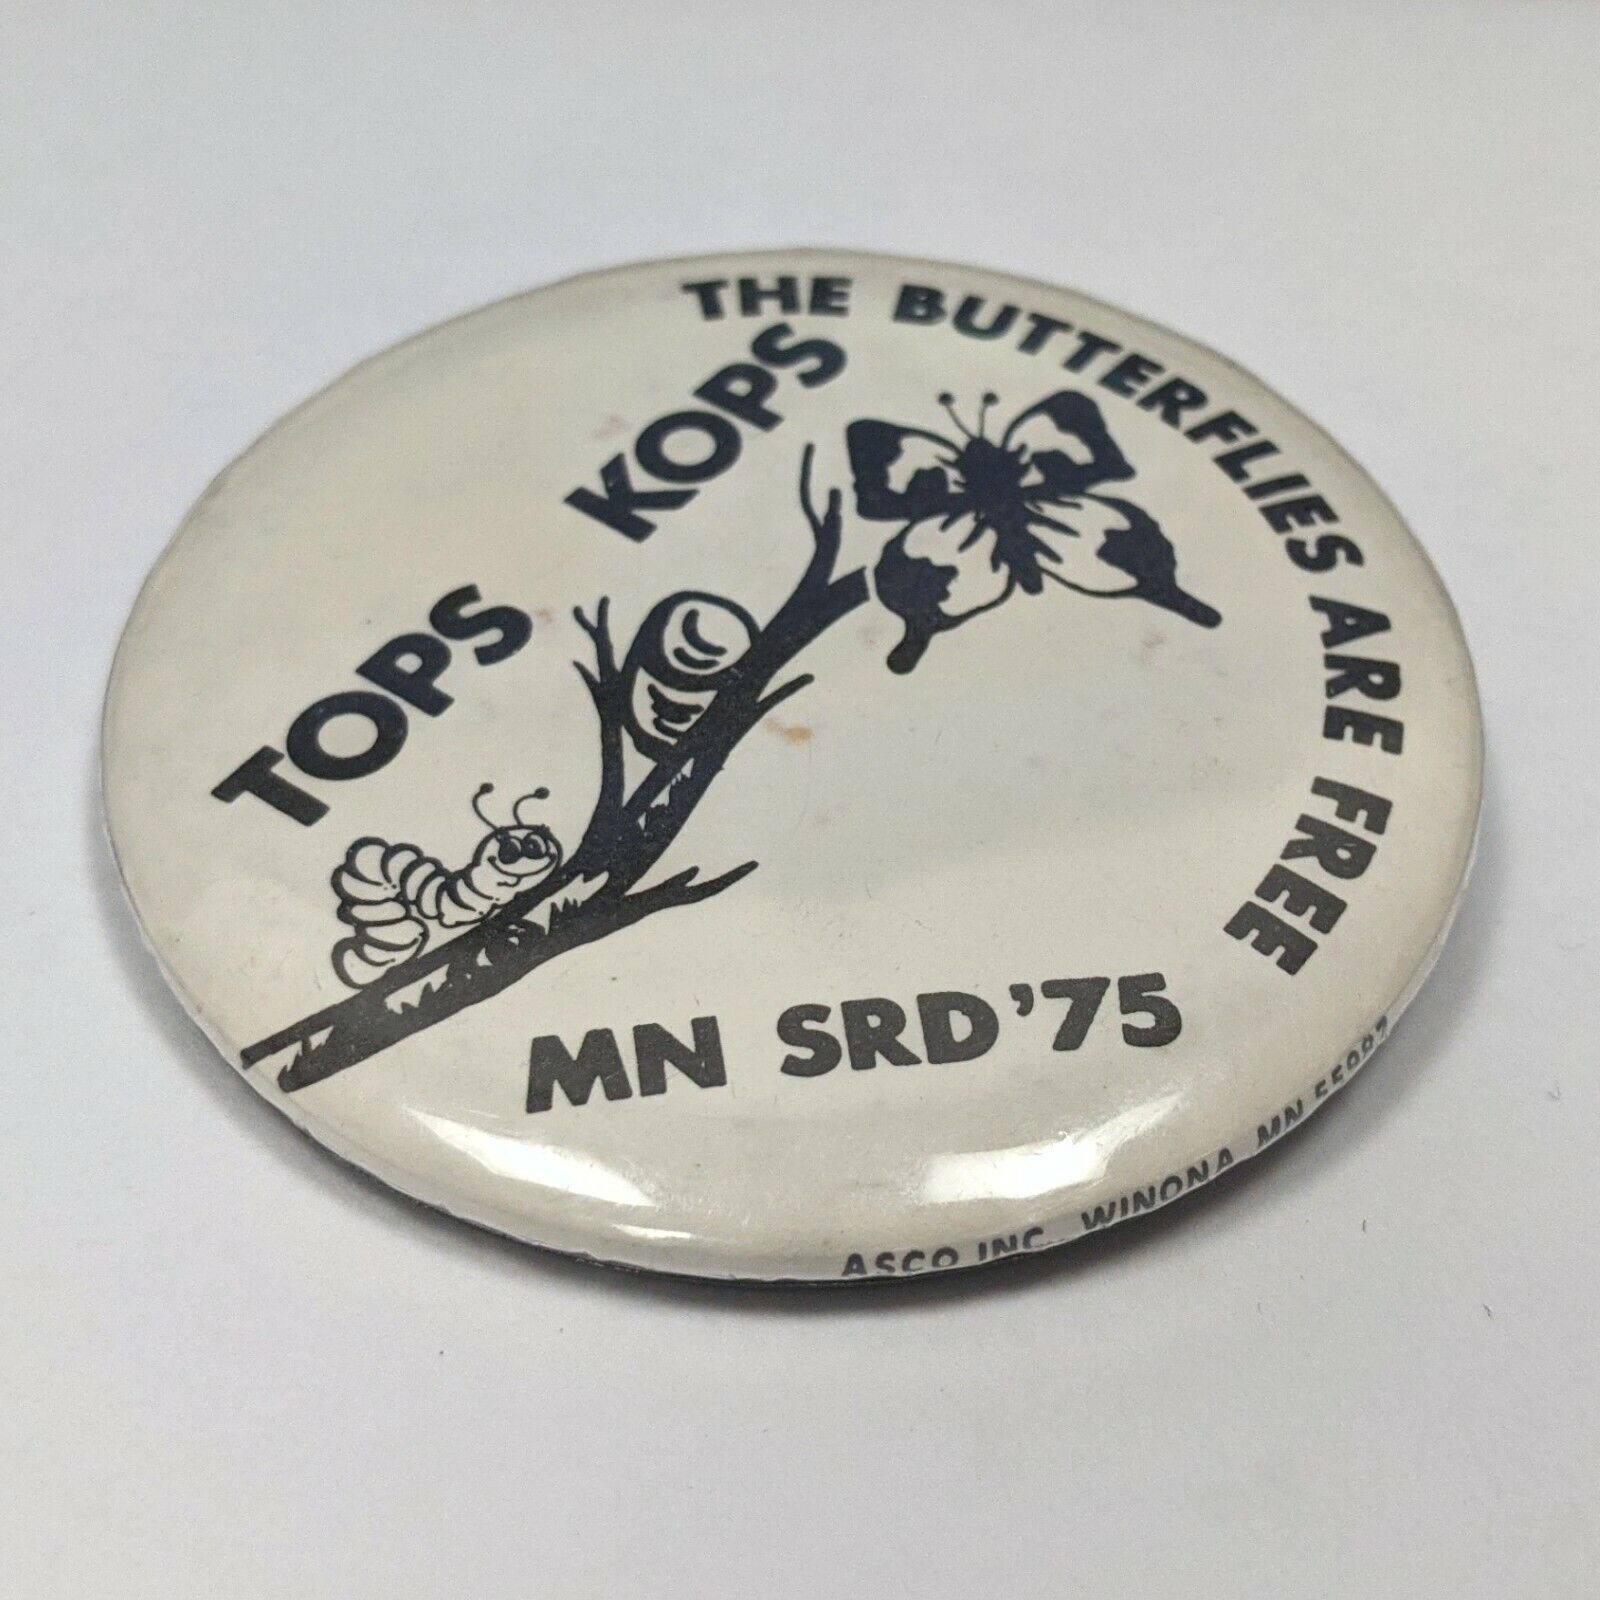 1975 Tops Kops The Butterflies Are Free MN SRD '75 Pinback 2.5